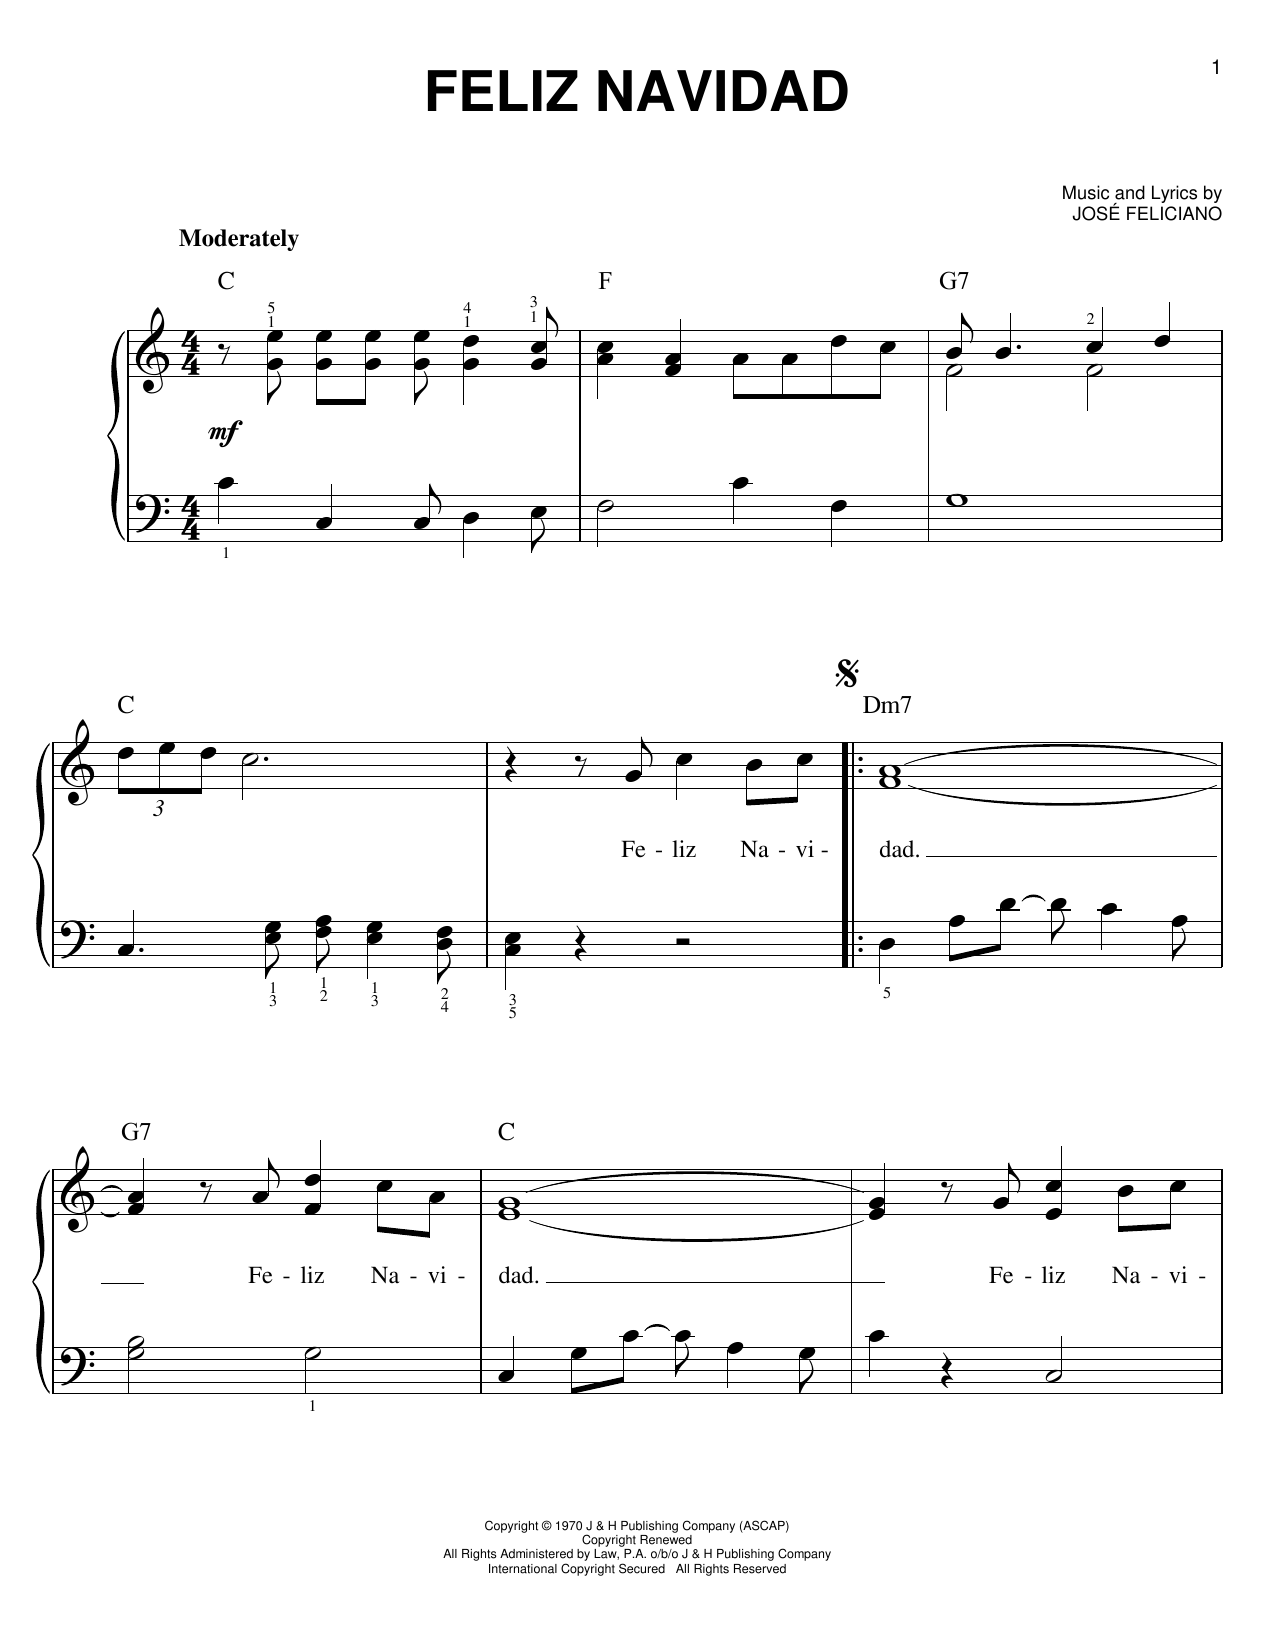 Jose Feliciano Feliz Navidad Sheet Music Notes & Chords for Piano & Vocal - Download or Print PDF